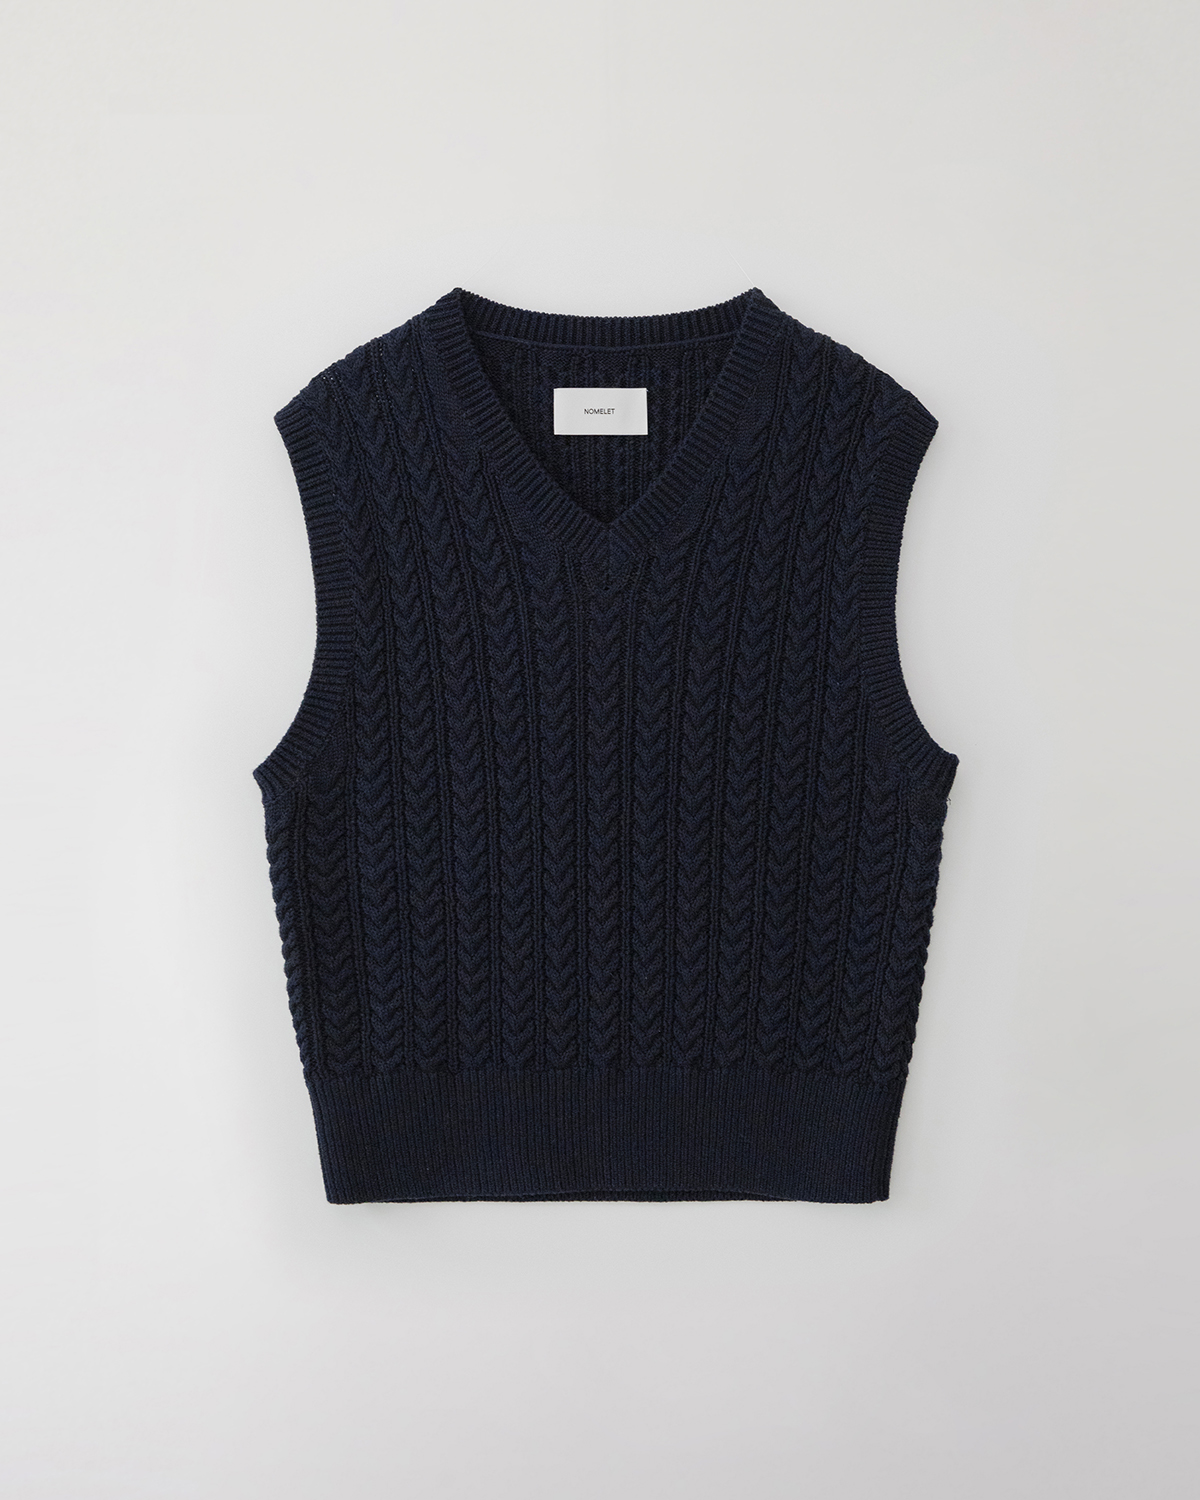 Rachel cable knit vest - deep navy [3/23까지 예약 발송]